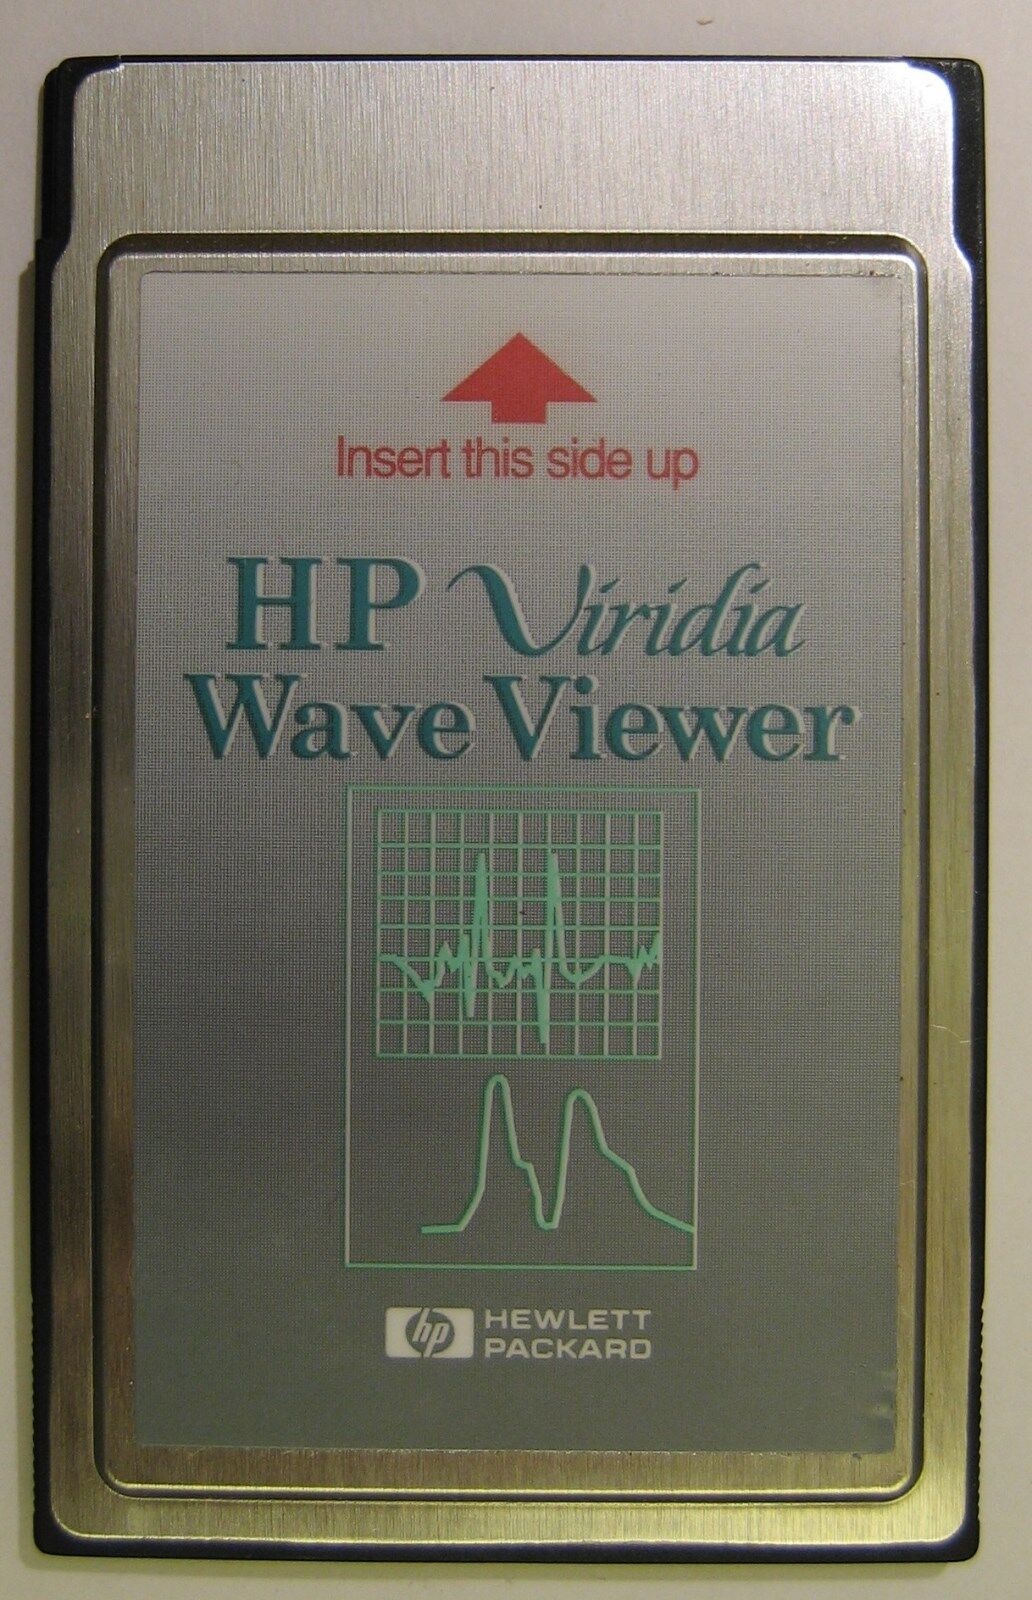 Virida Wave Viewer PCMCIA Card For HP 200LX Palmtop